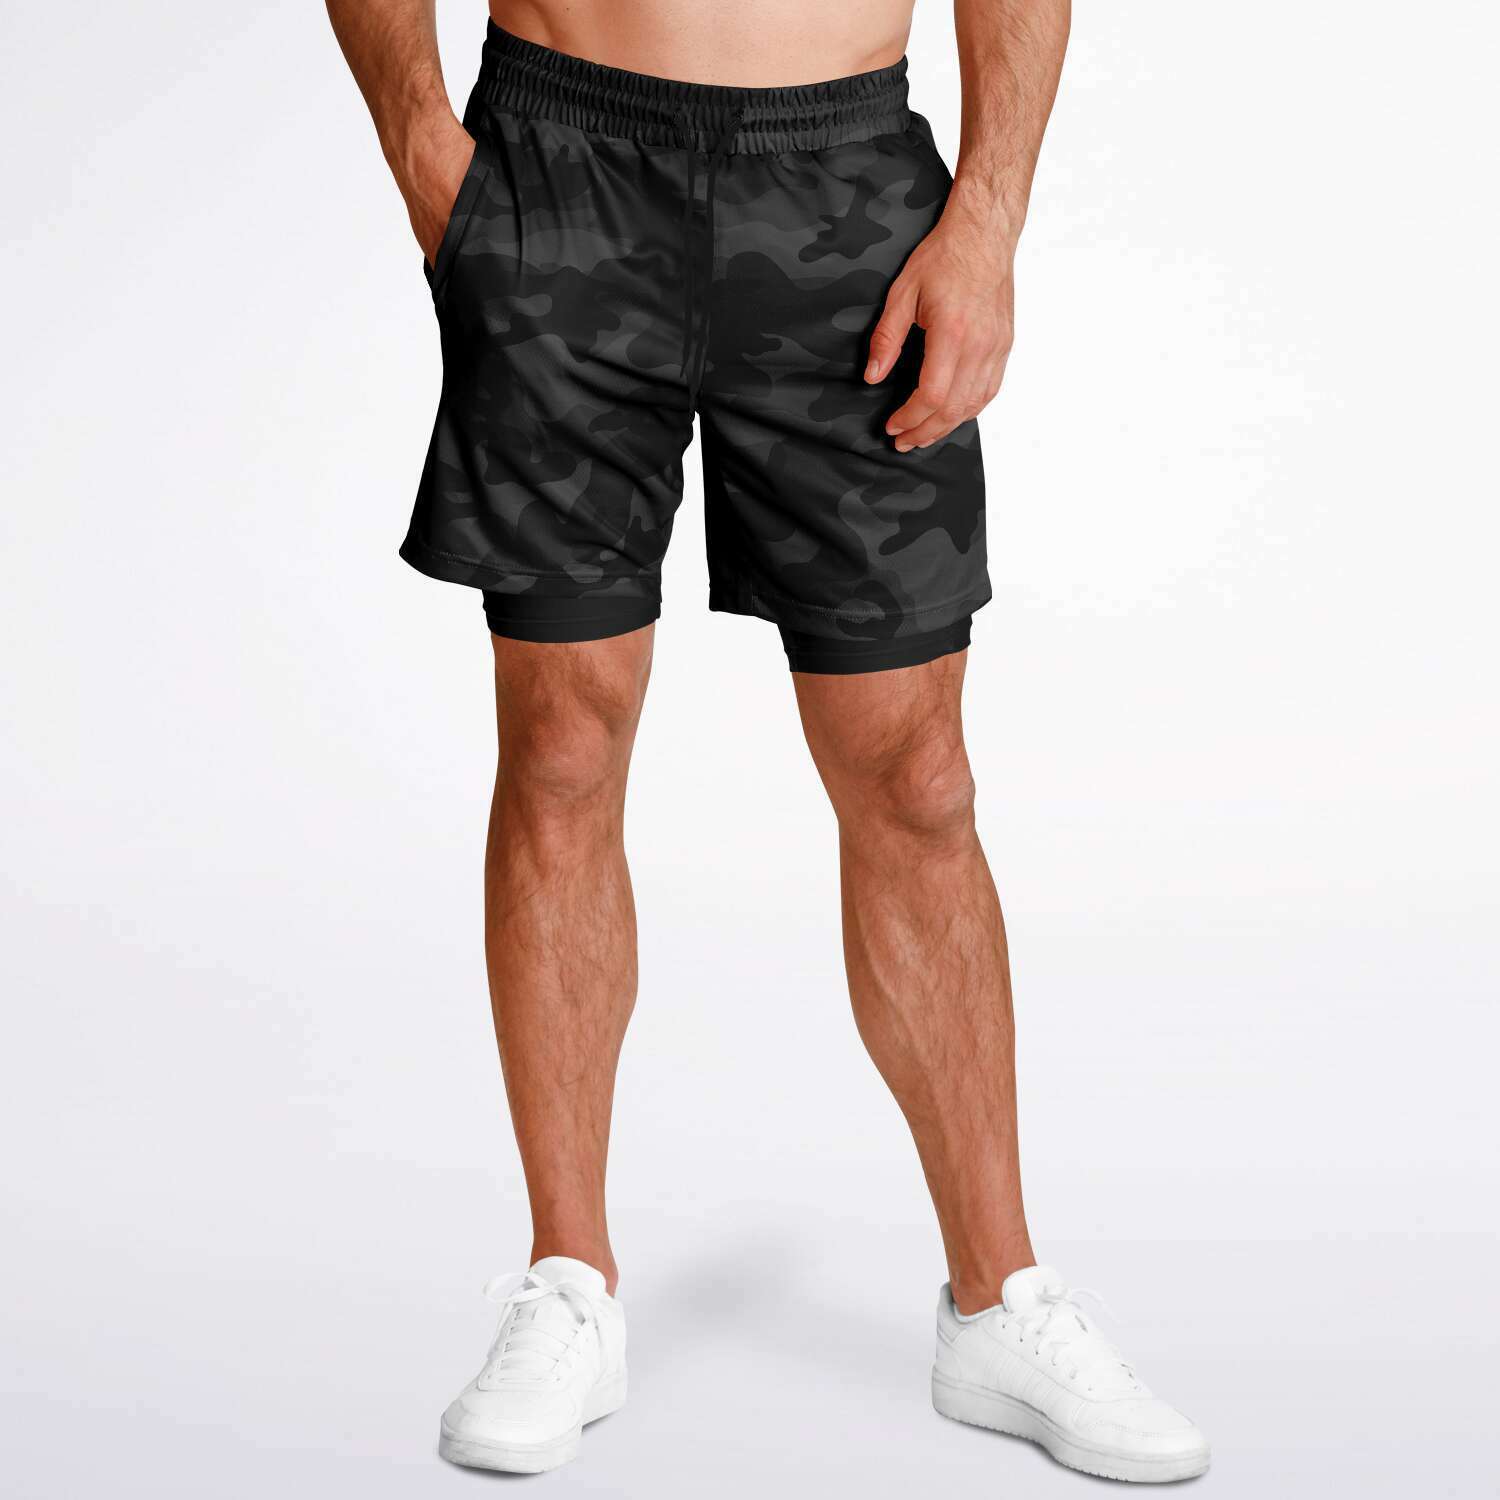 All Black Camo Shorts